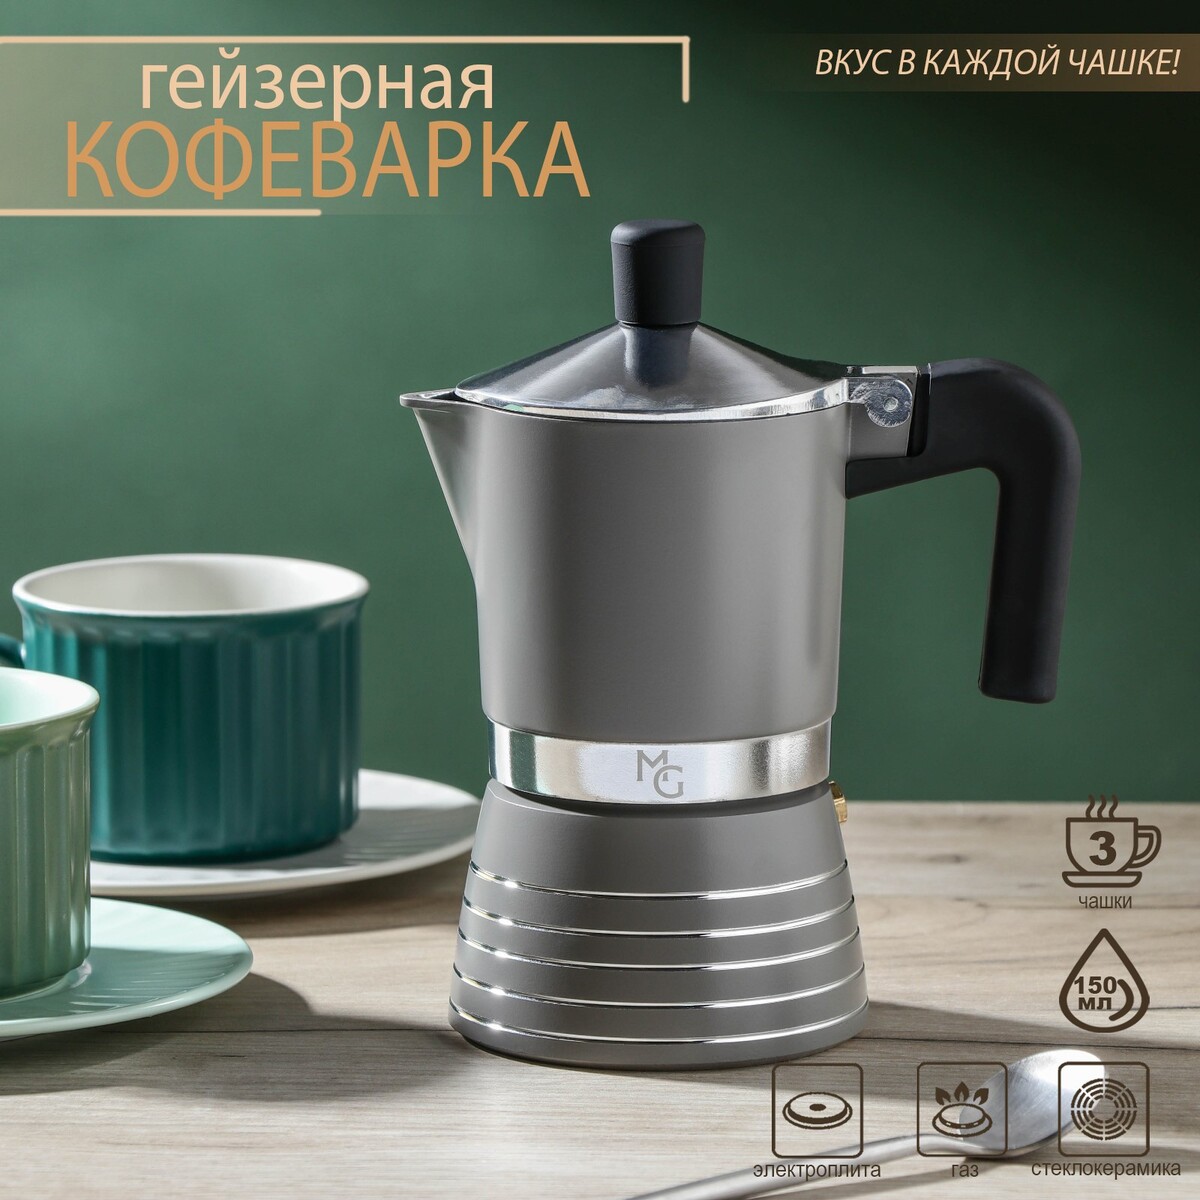 Кофеварка гейзерная magistro moka, на 3 чашки, 150 мл кофеварка гейзерная bialetti moka express 9 порций 1165